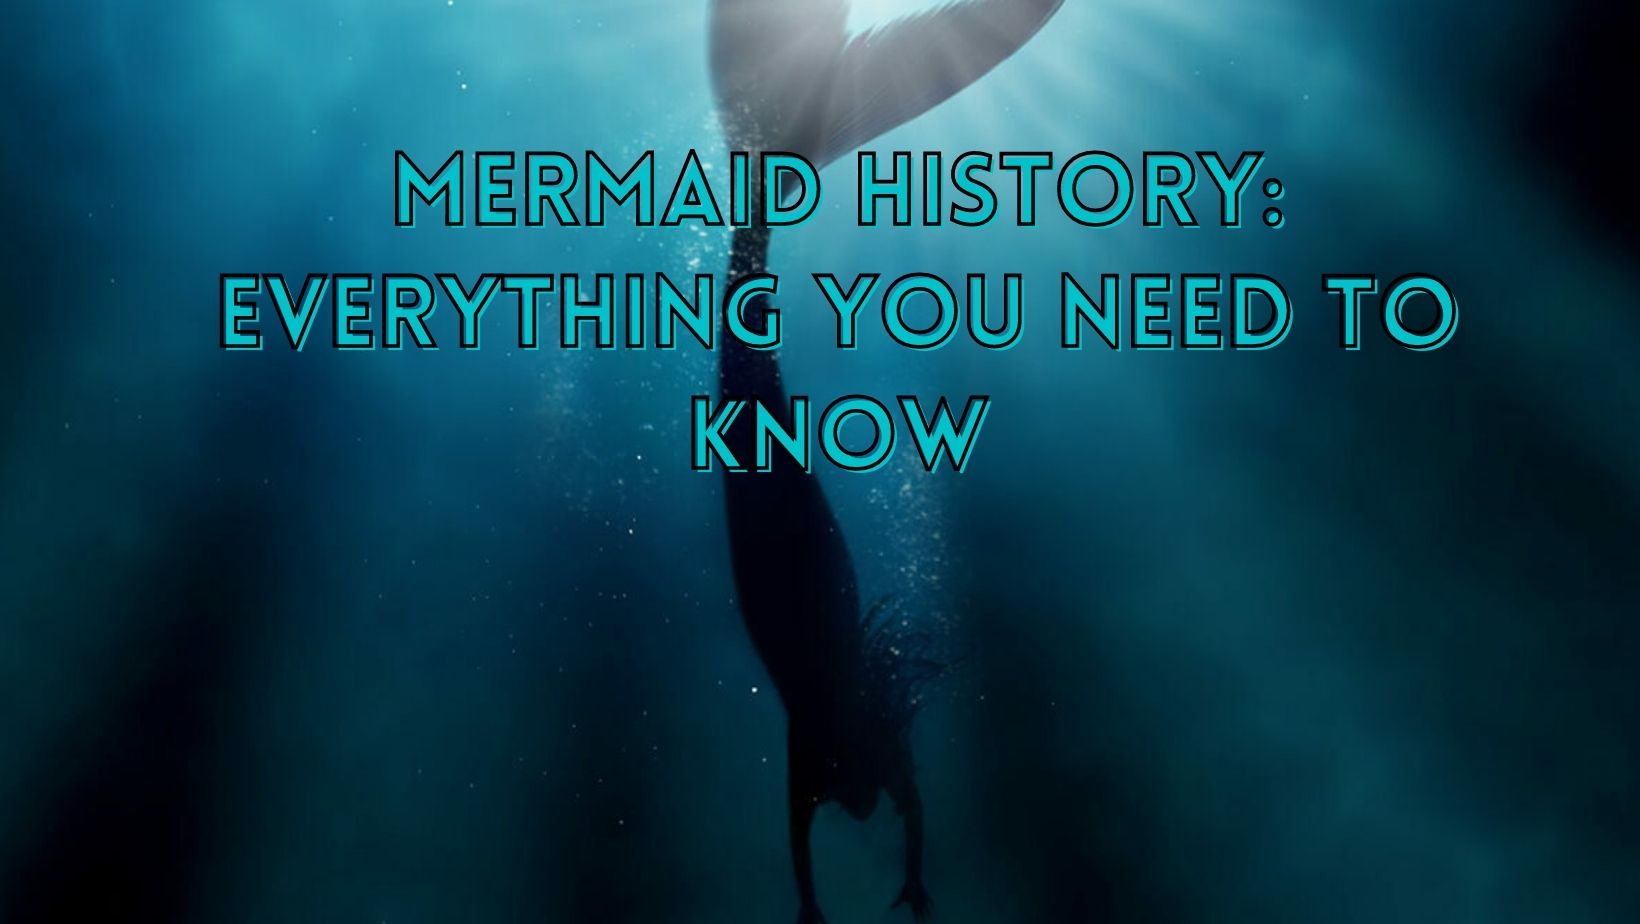 Amazing mermaid history